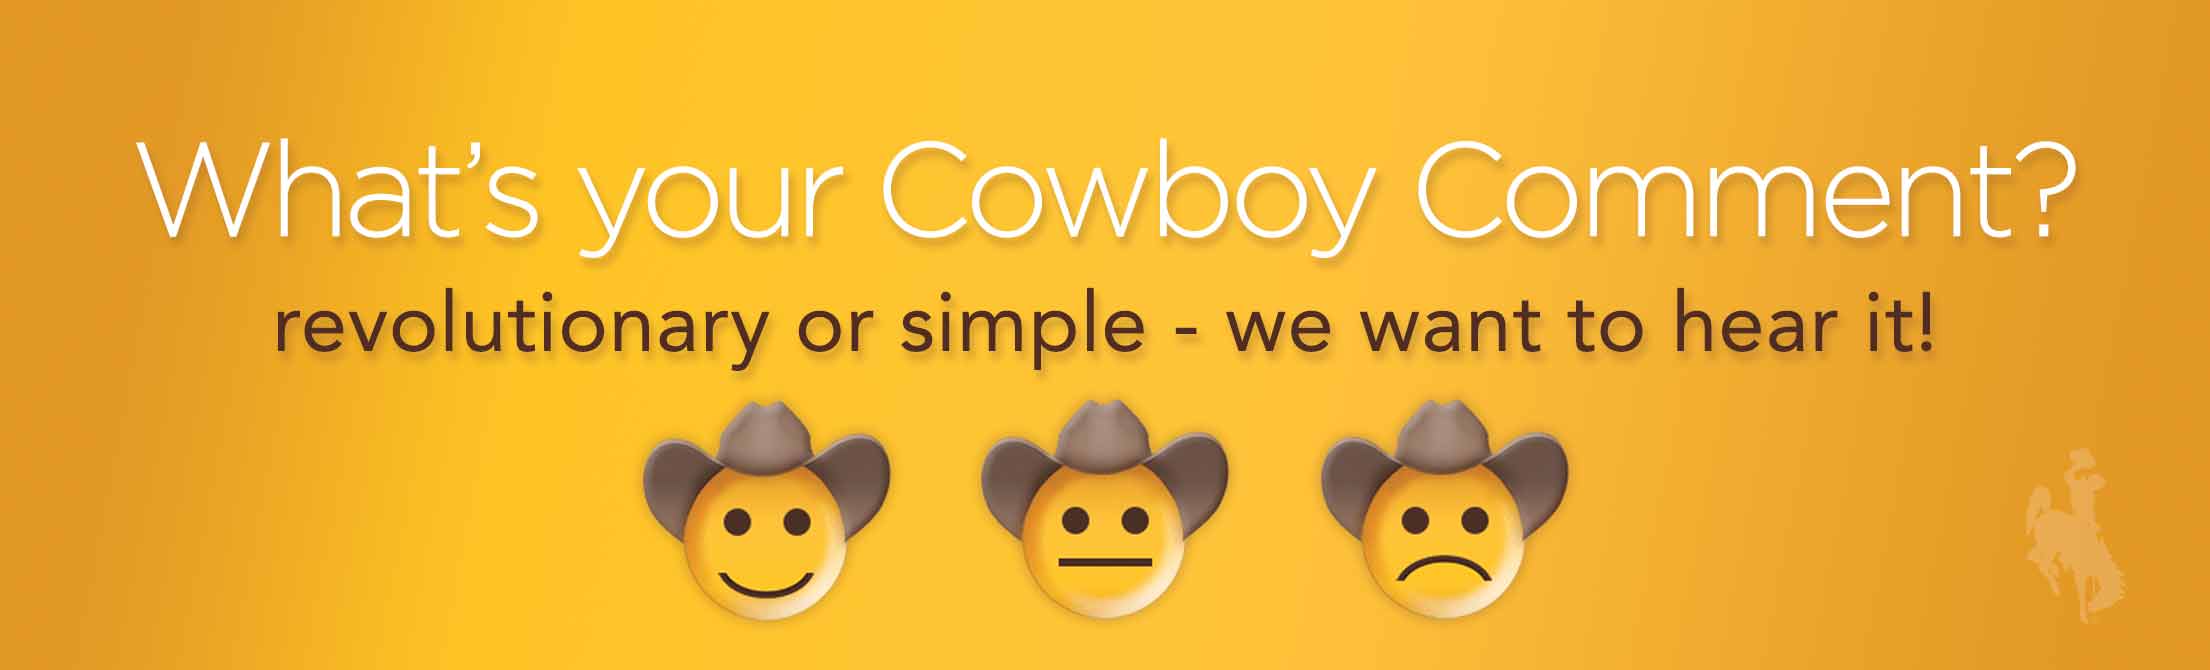 What's your Cowboy Comment?